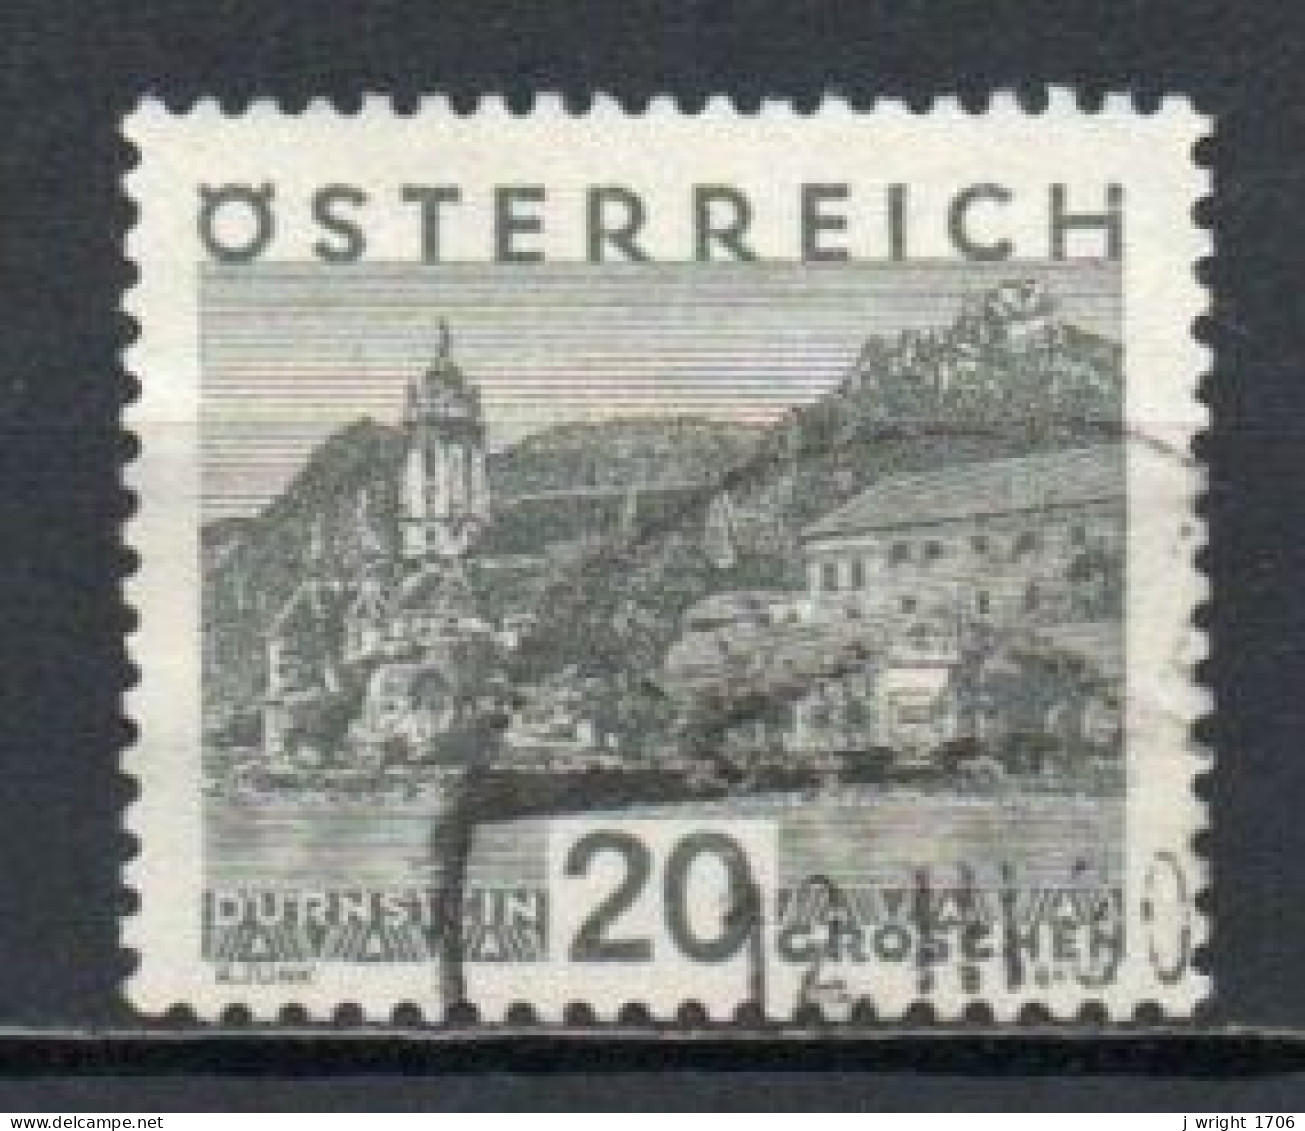 Austria, 1930, Landscapes Large Format/Dürnstein, 20g, USED - Usati